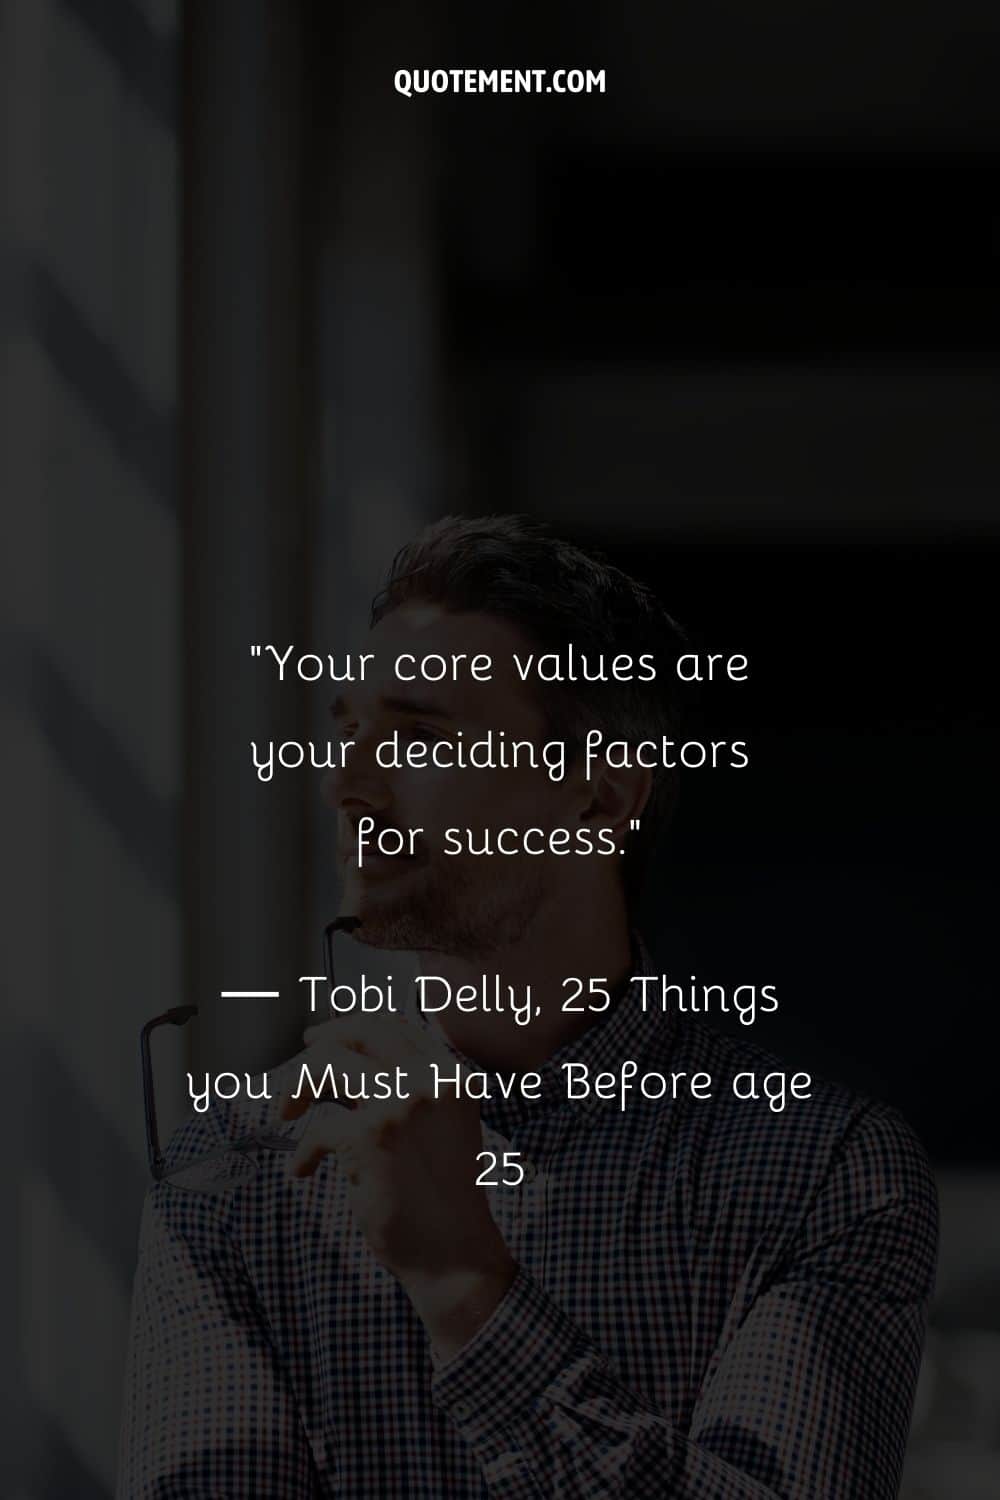 Your core values are your deciding factors for success